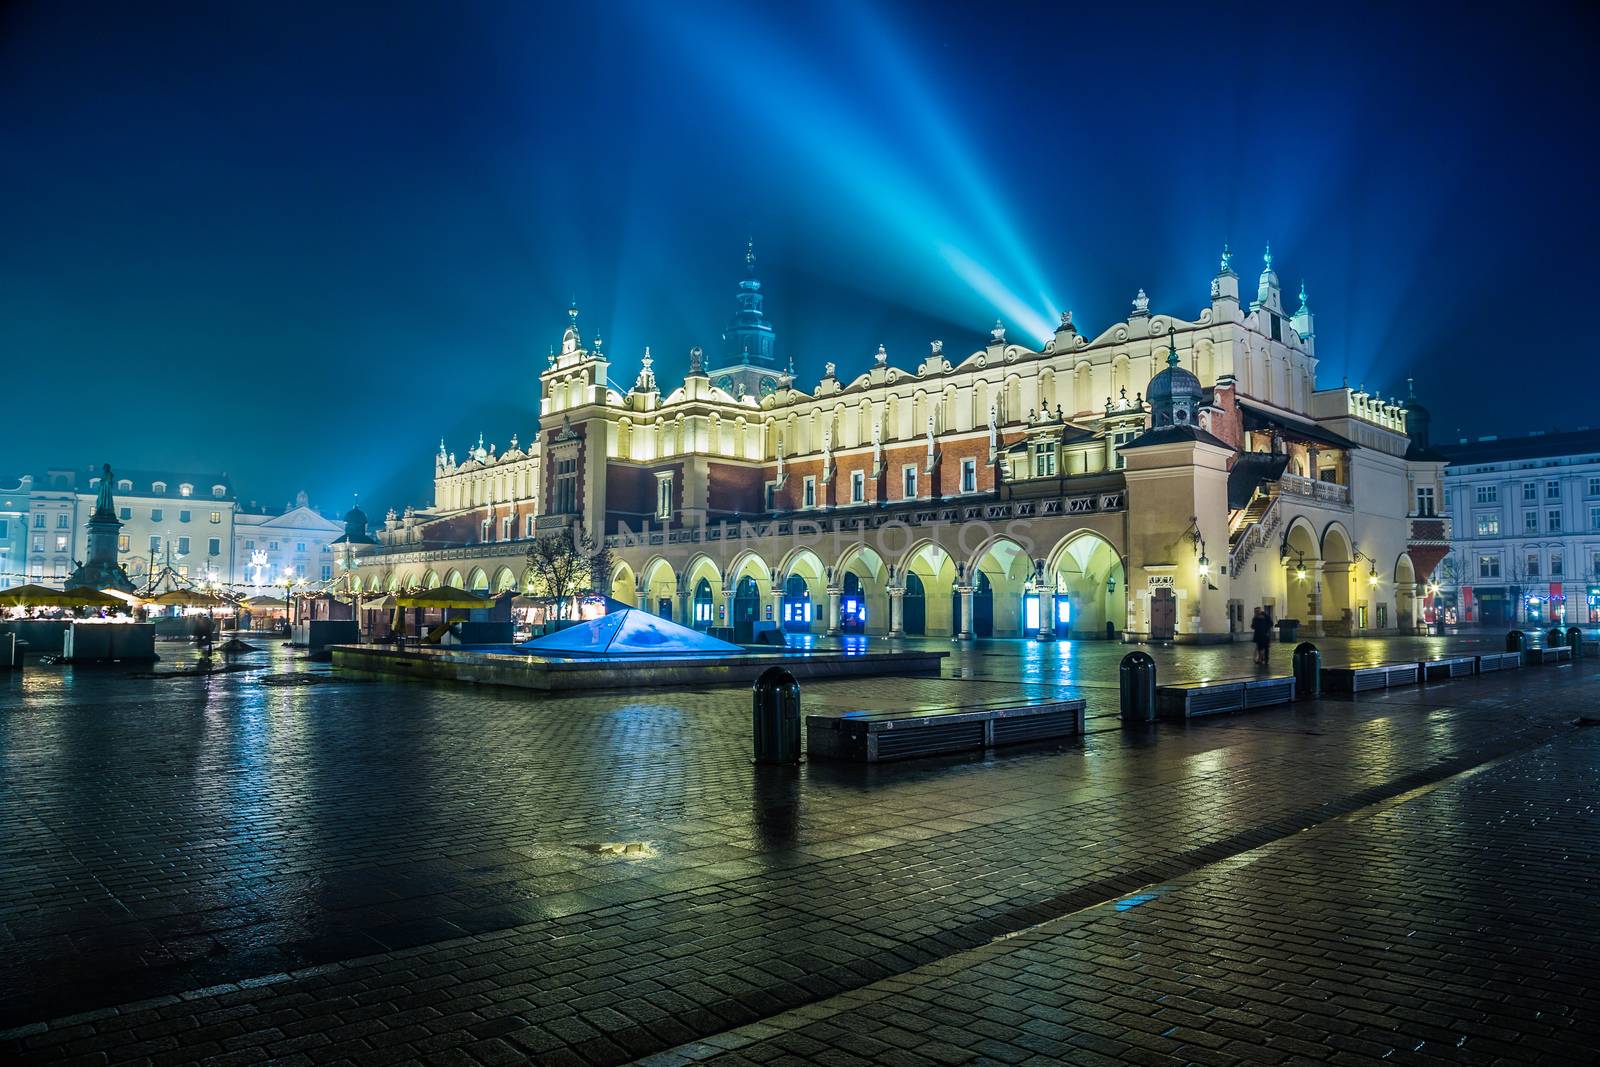 Krakow old city at night. Market Square at night.